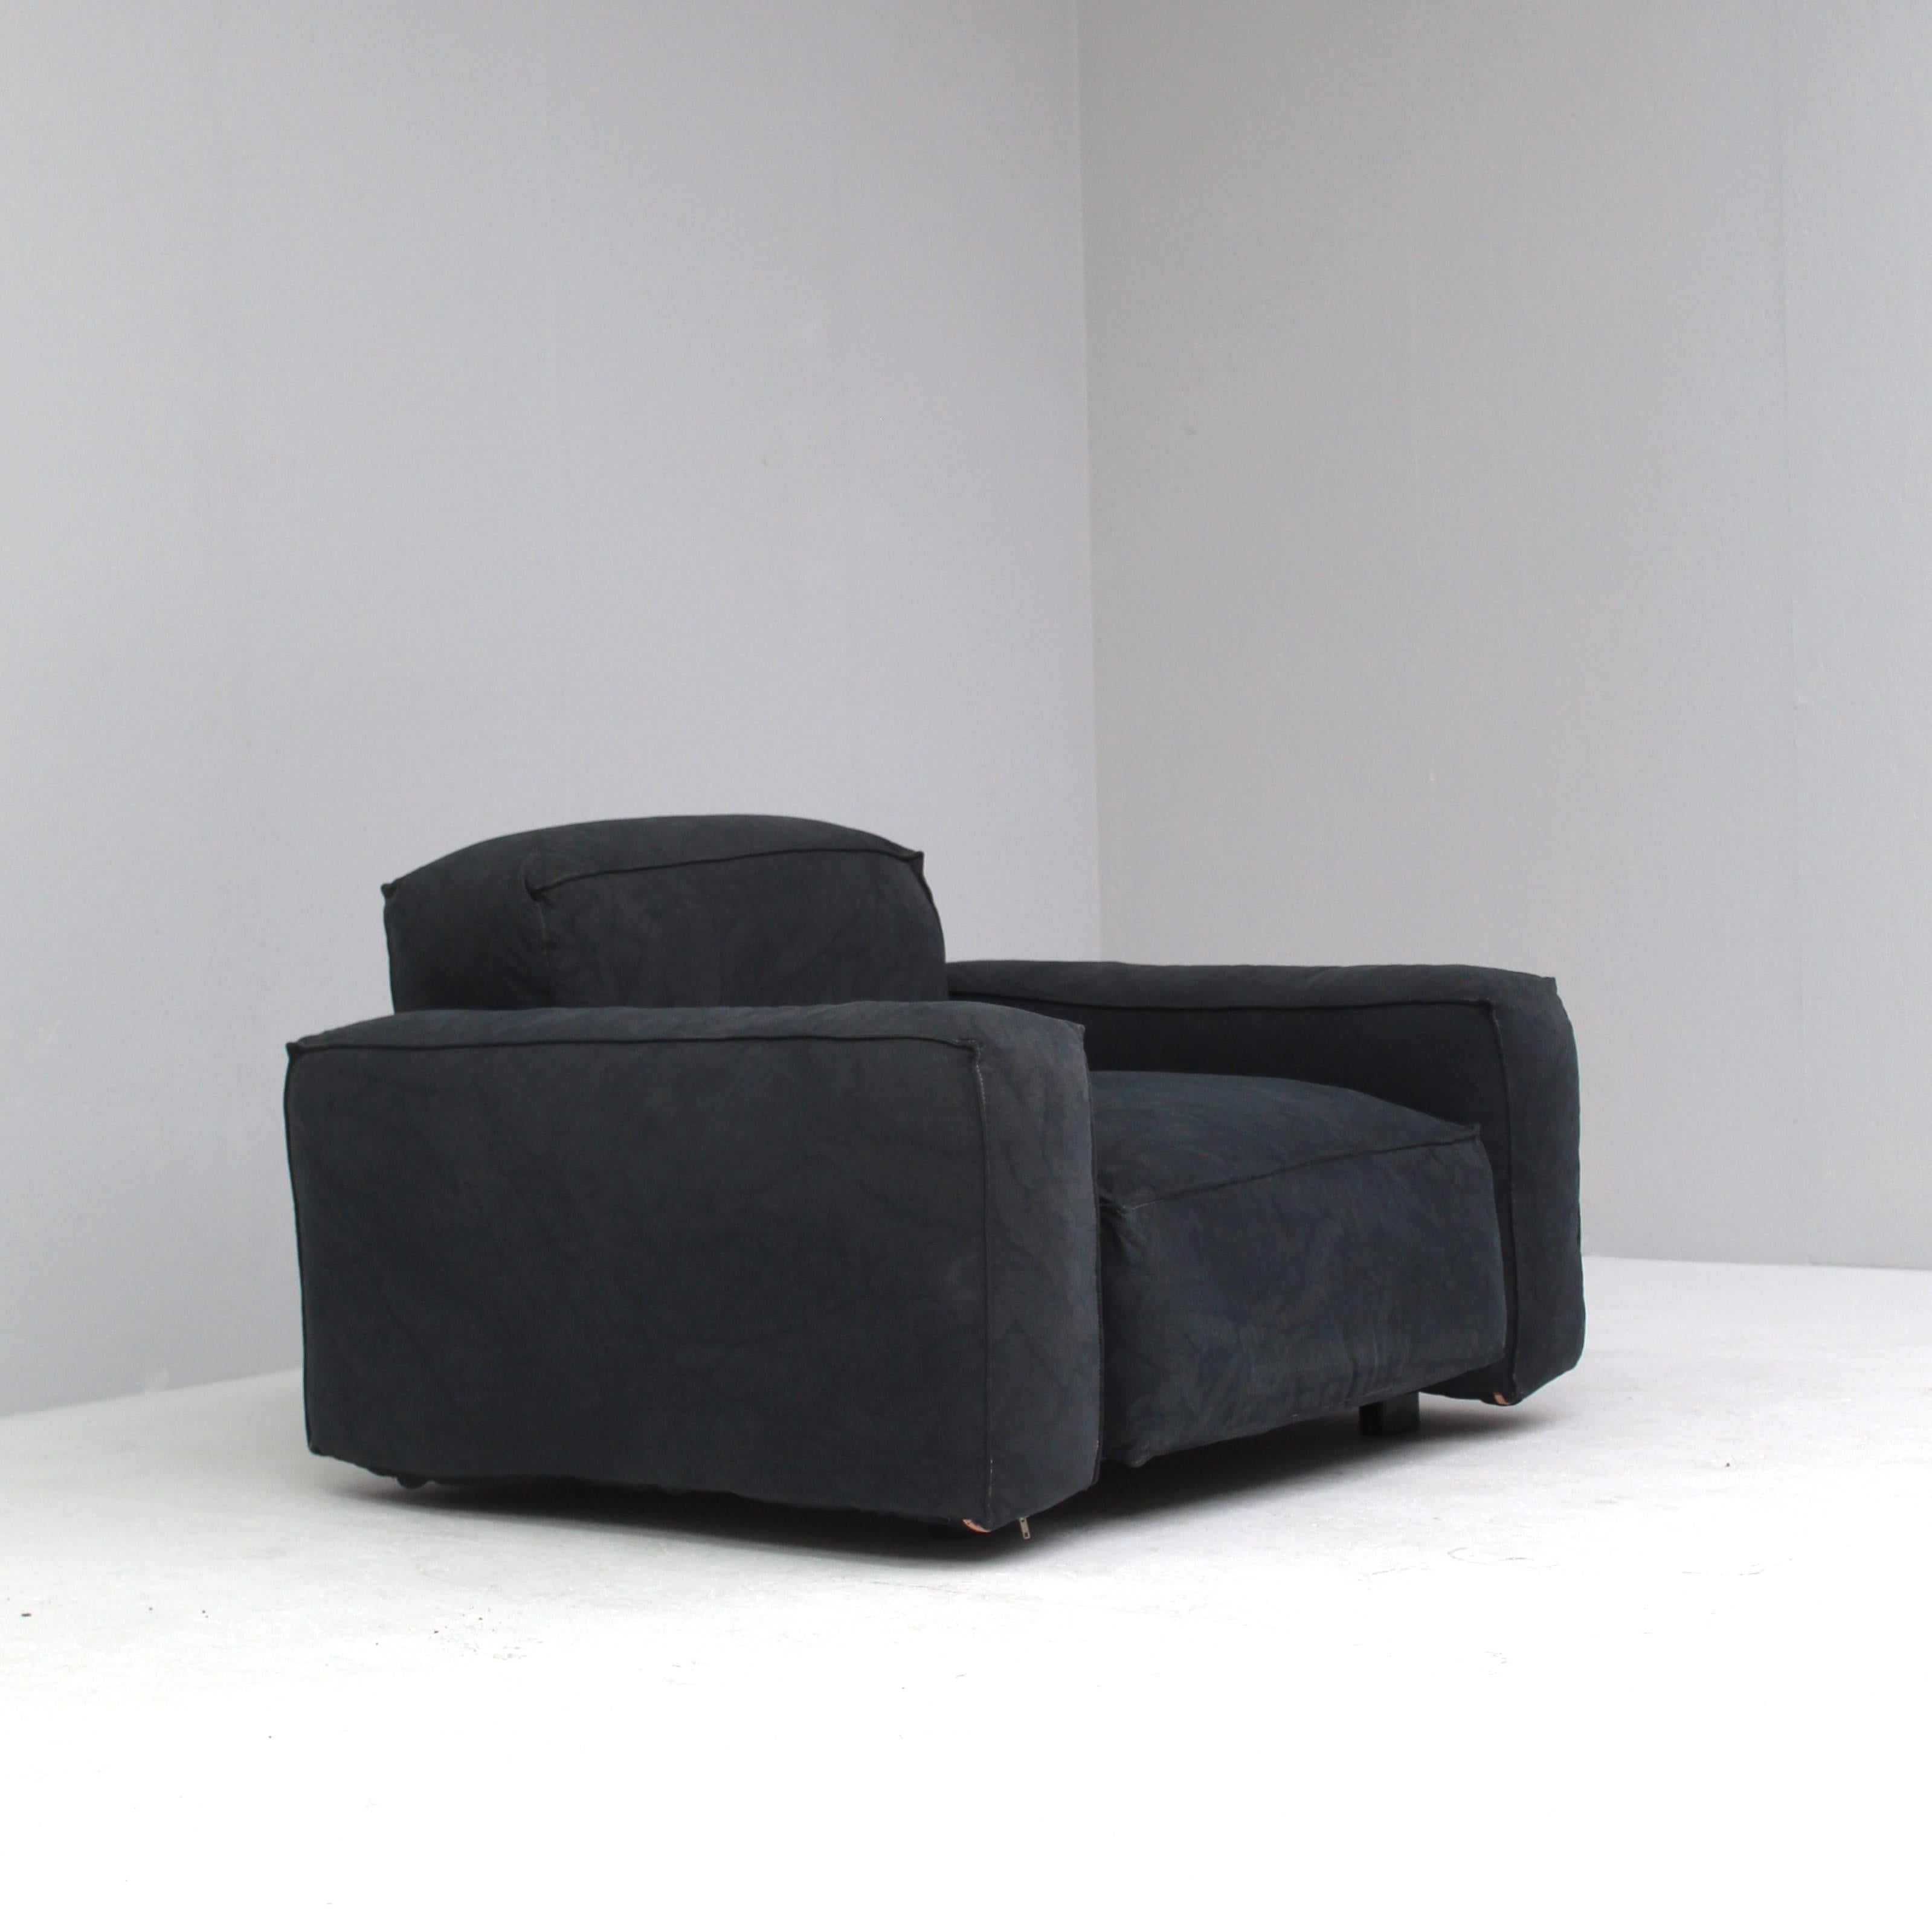 Marechiaro sofa set by Mario Marenco for Arflex For Sale 1